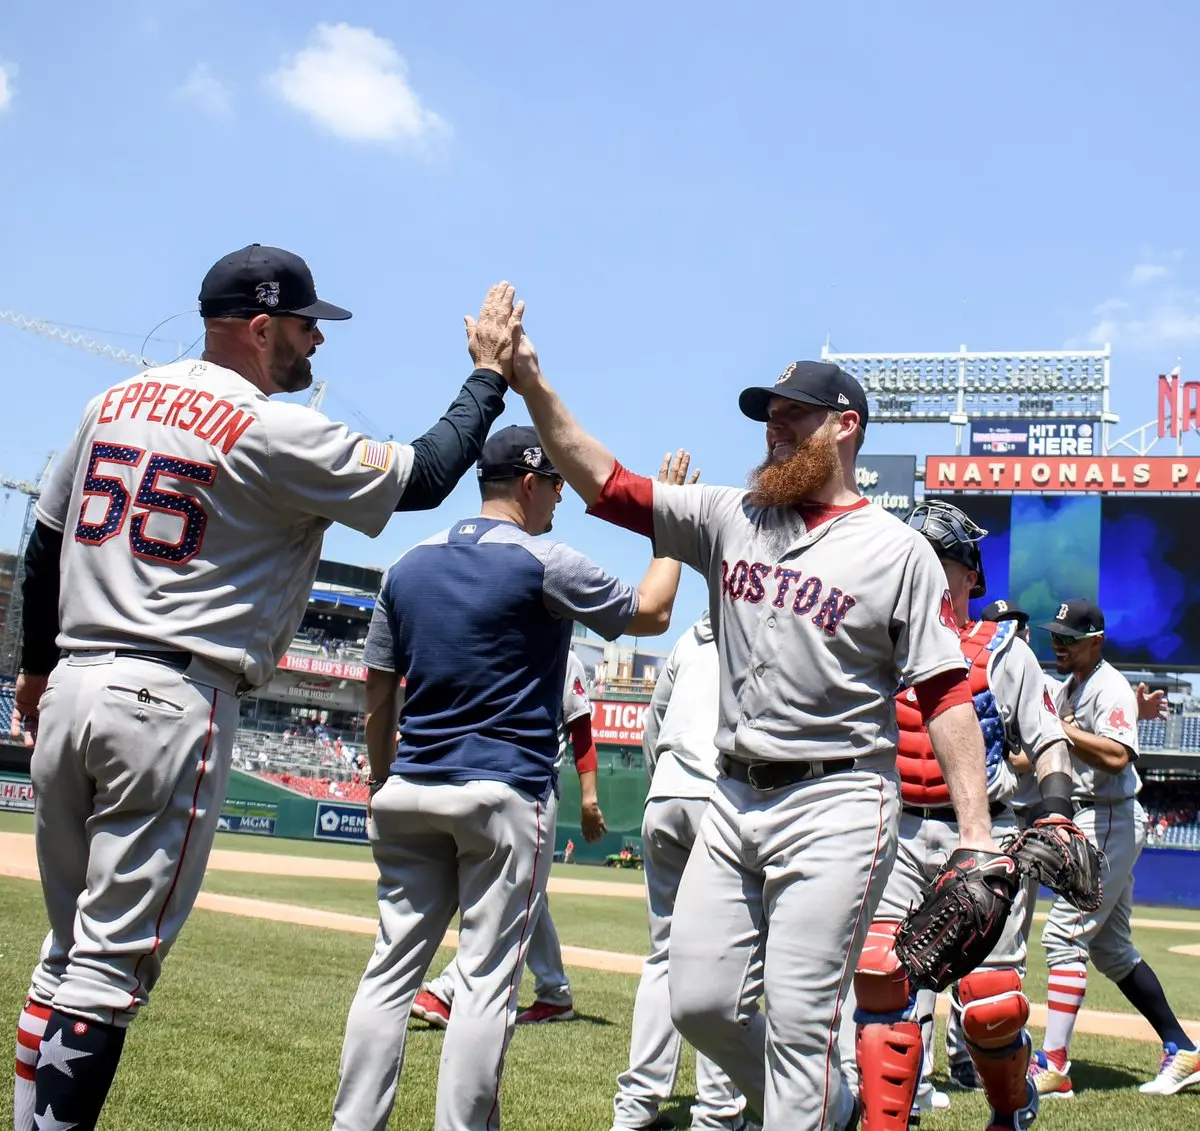 Boston Red Sox celebra vitória e varrida sobre o Washington Nationals